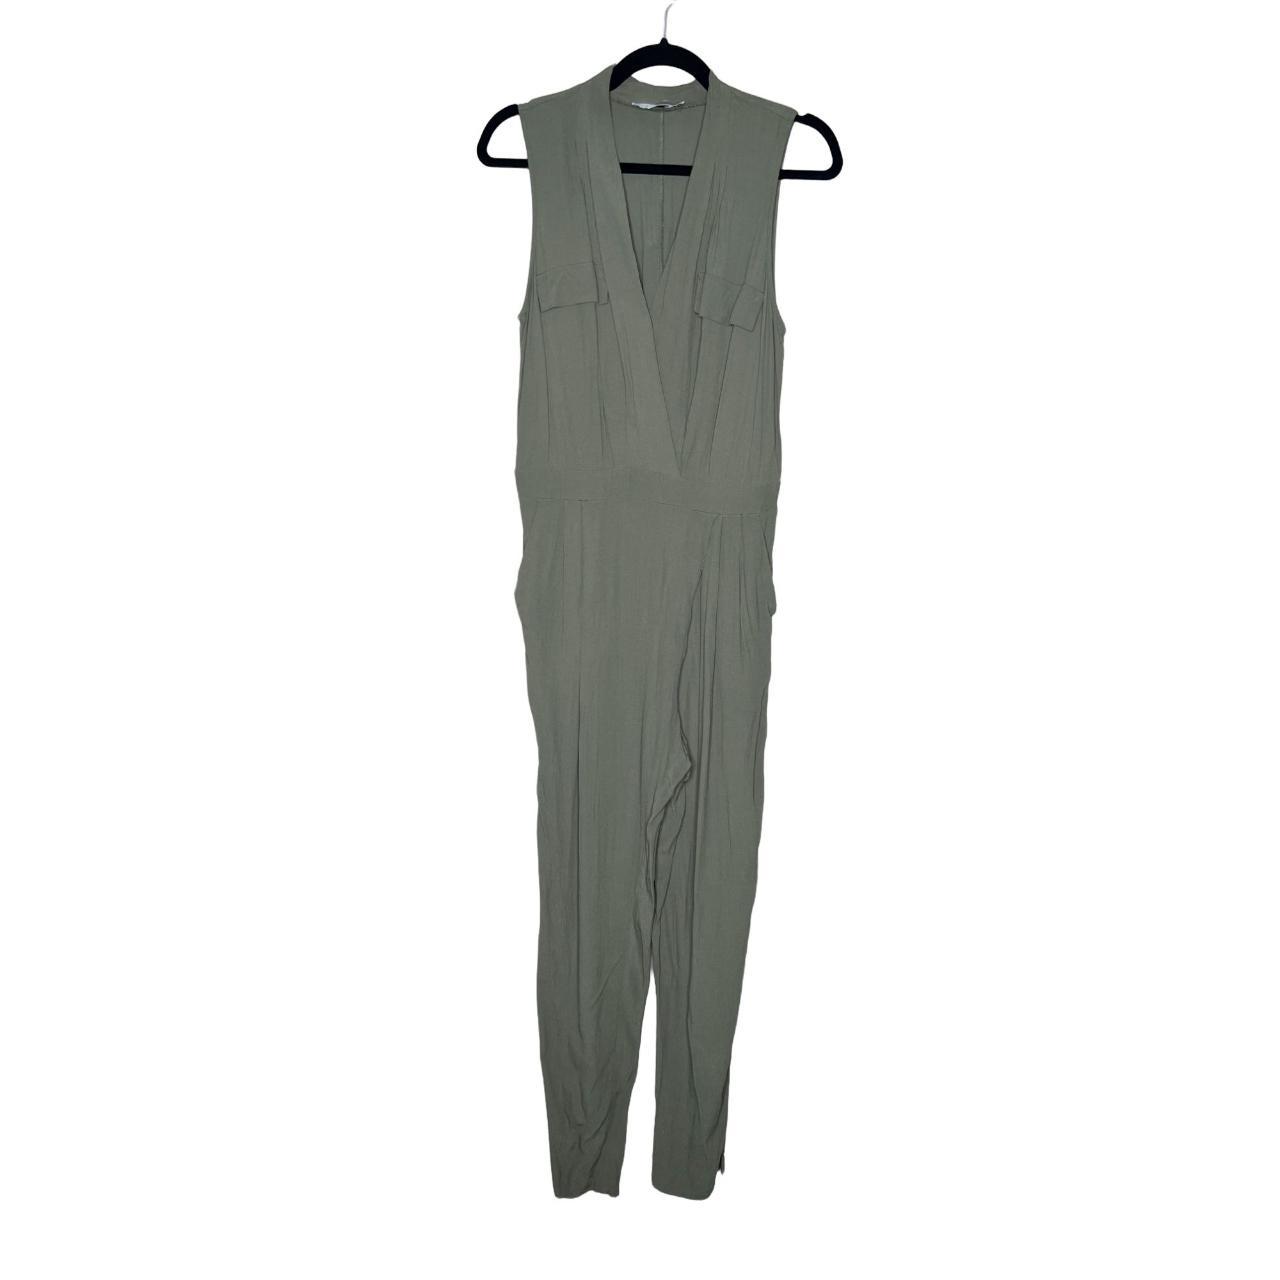 Product Image 1 - Lush Women's Army Green Sleeveless